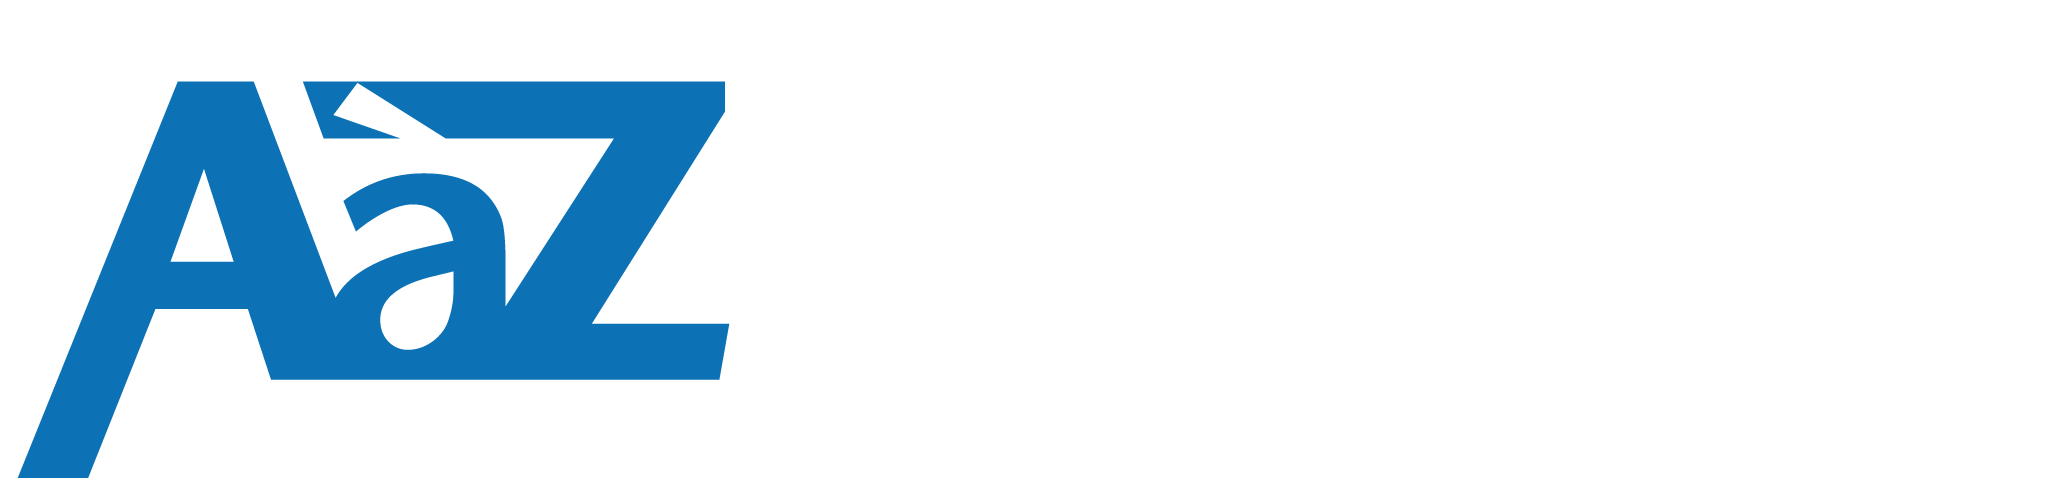 AàZsolutions.ch